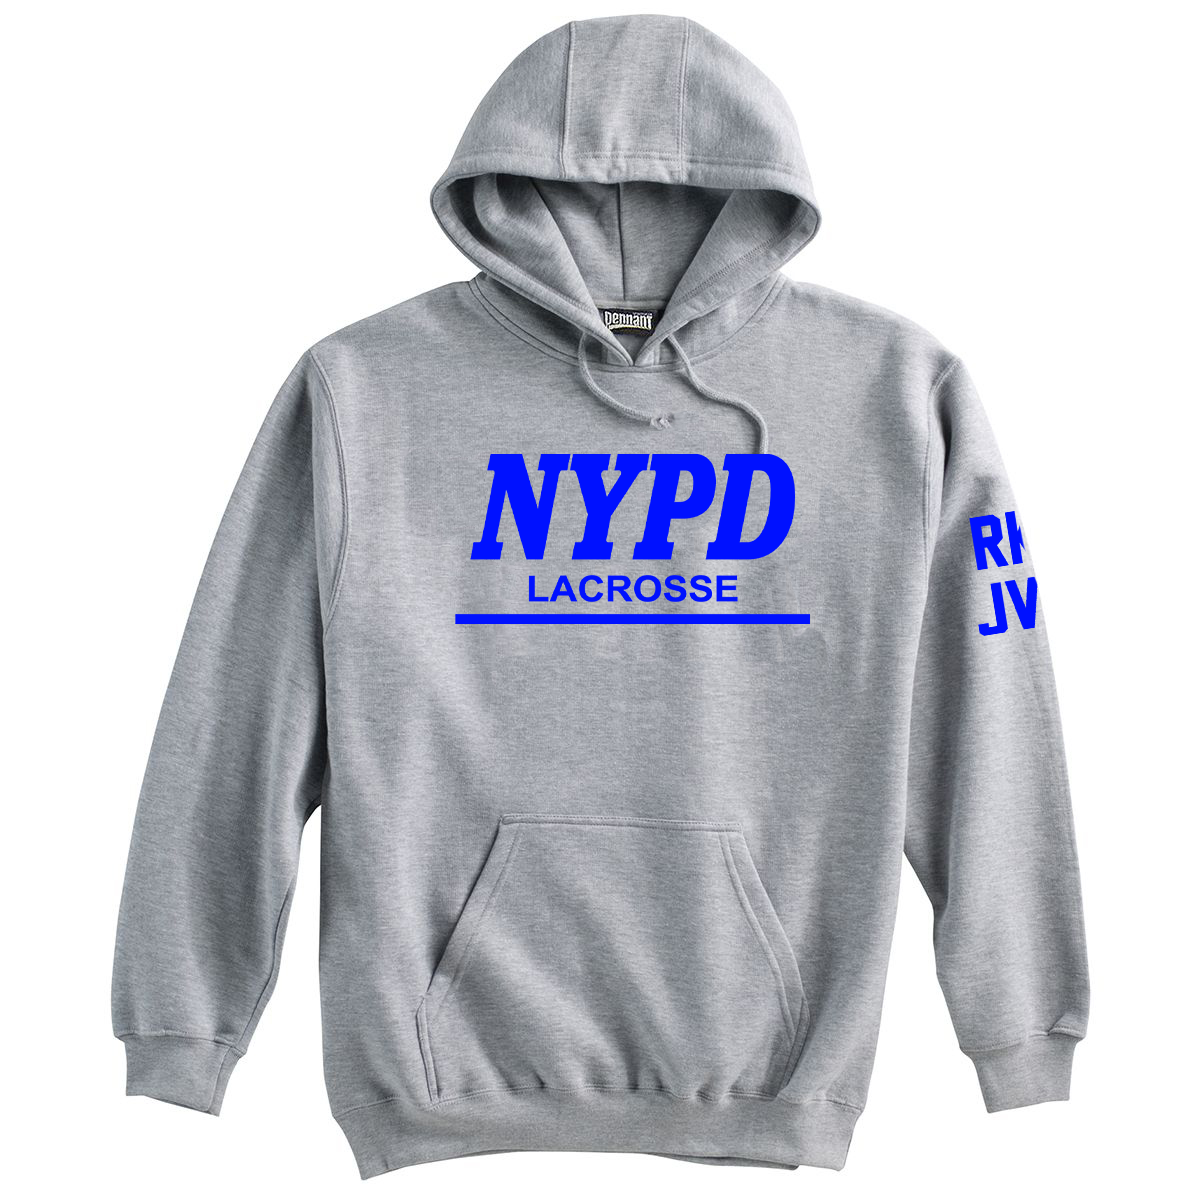 NYPD Lacrosse Sweatshirt